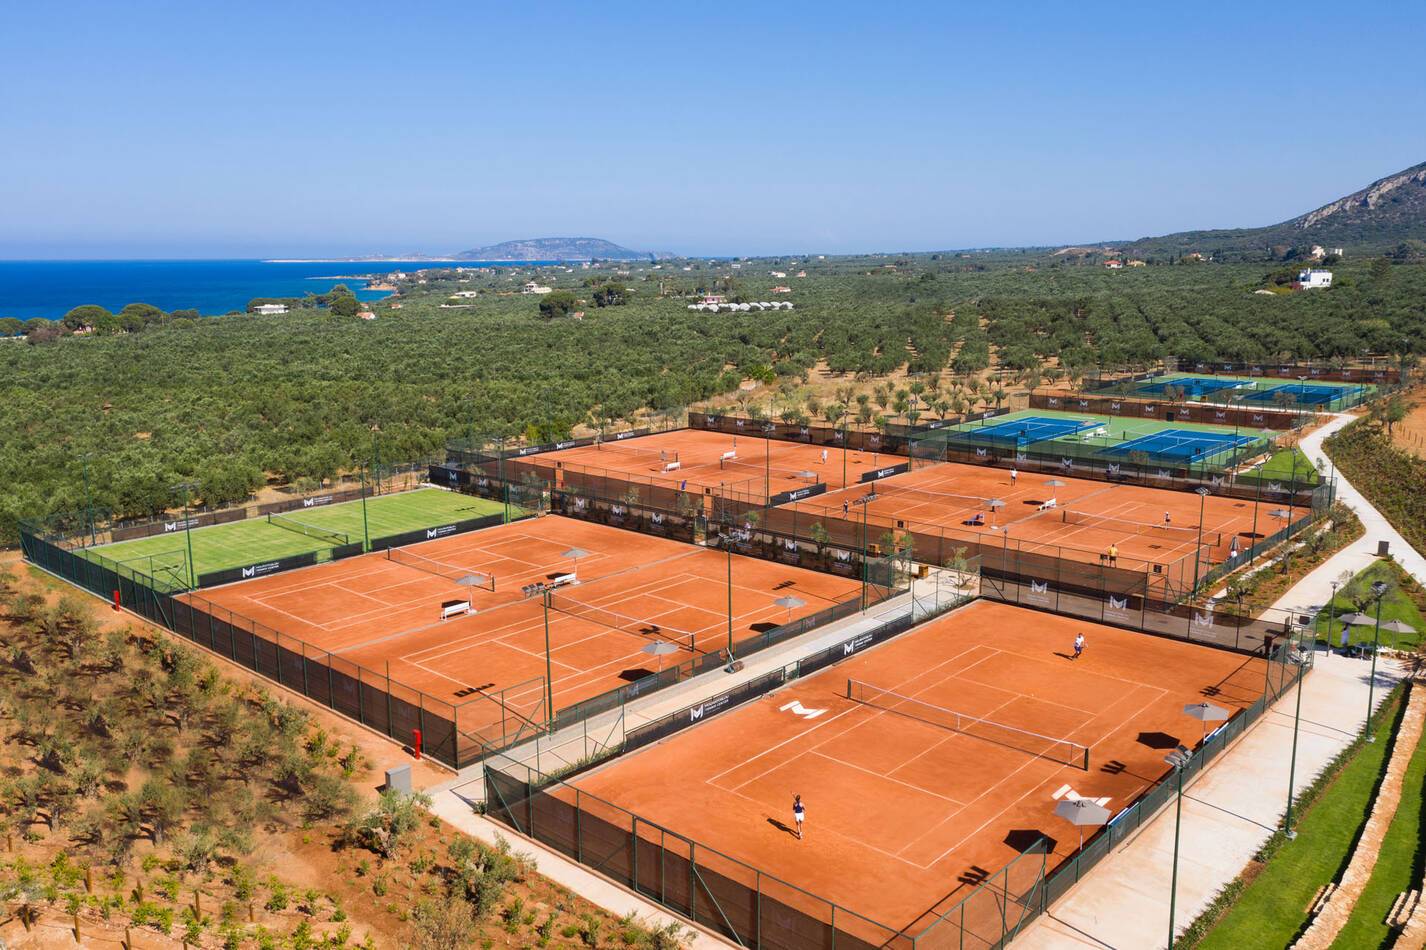 Westin Costa Navarino Grece Mouratoglou Tennis Center